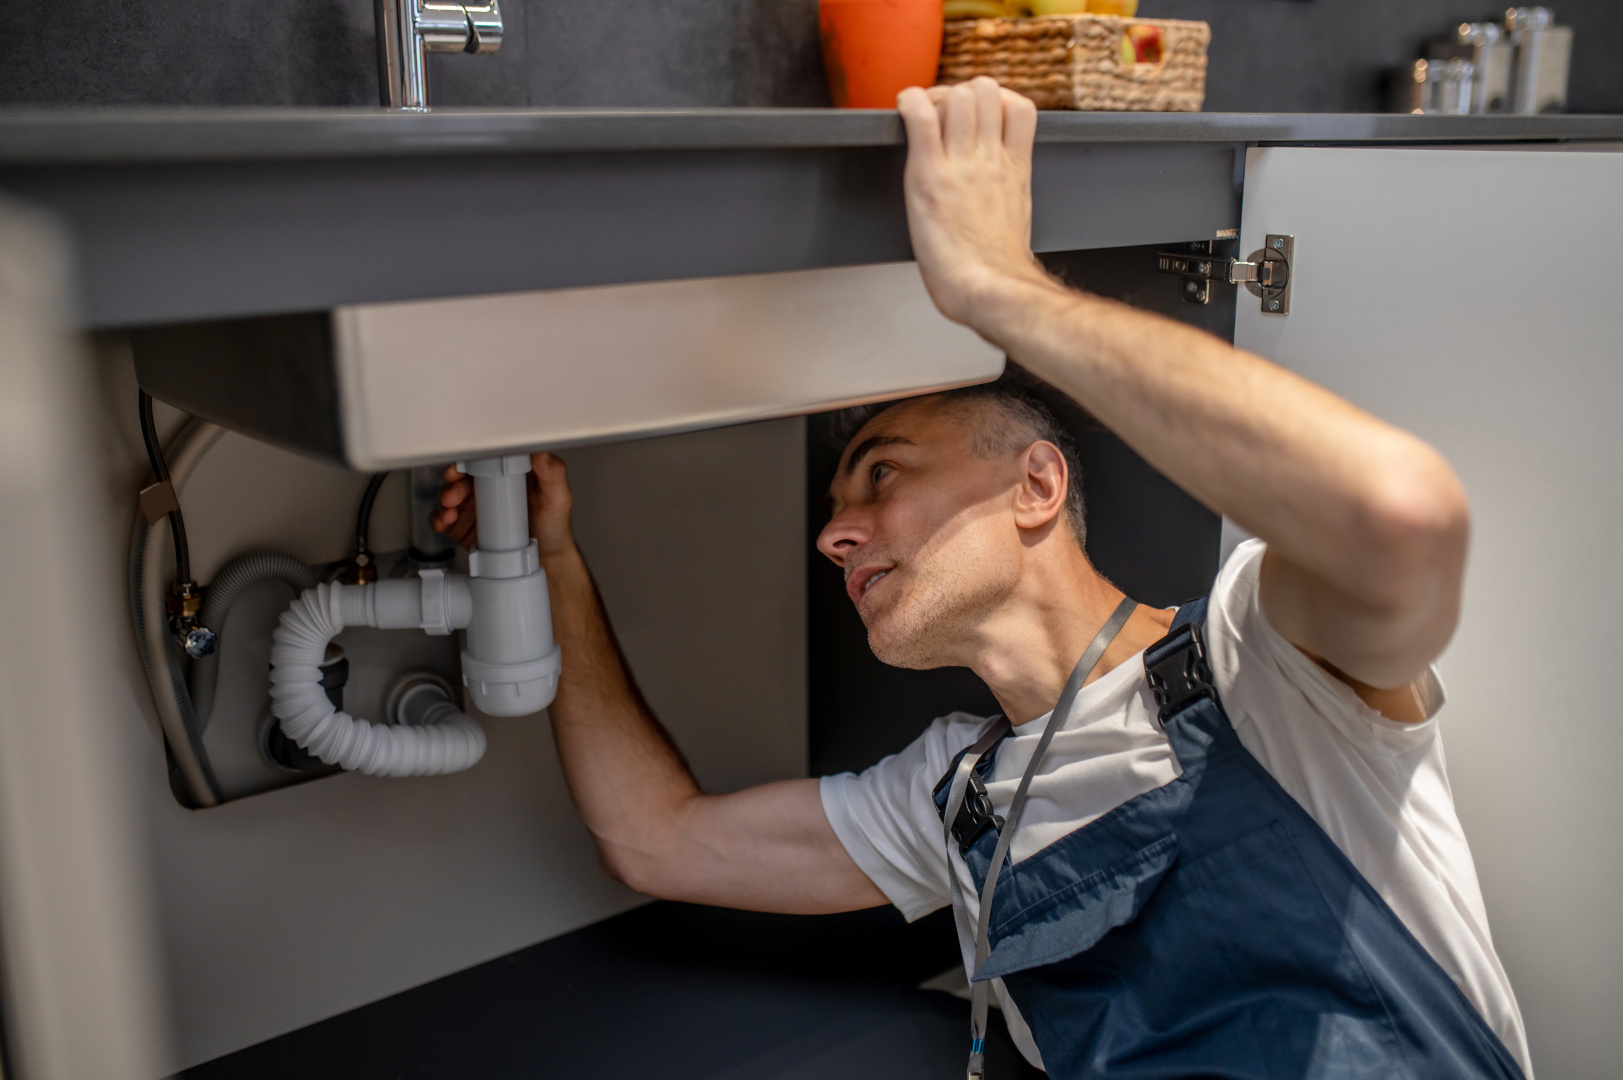 plumber-repair-experienced-attentive-middleaged-man-examining-bottom-kitchen-sink.jpg